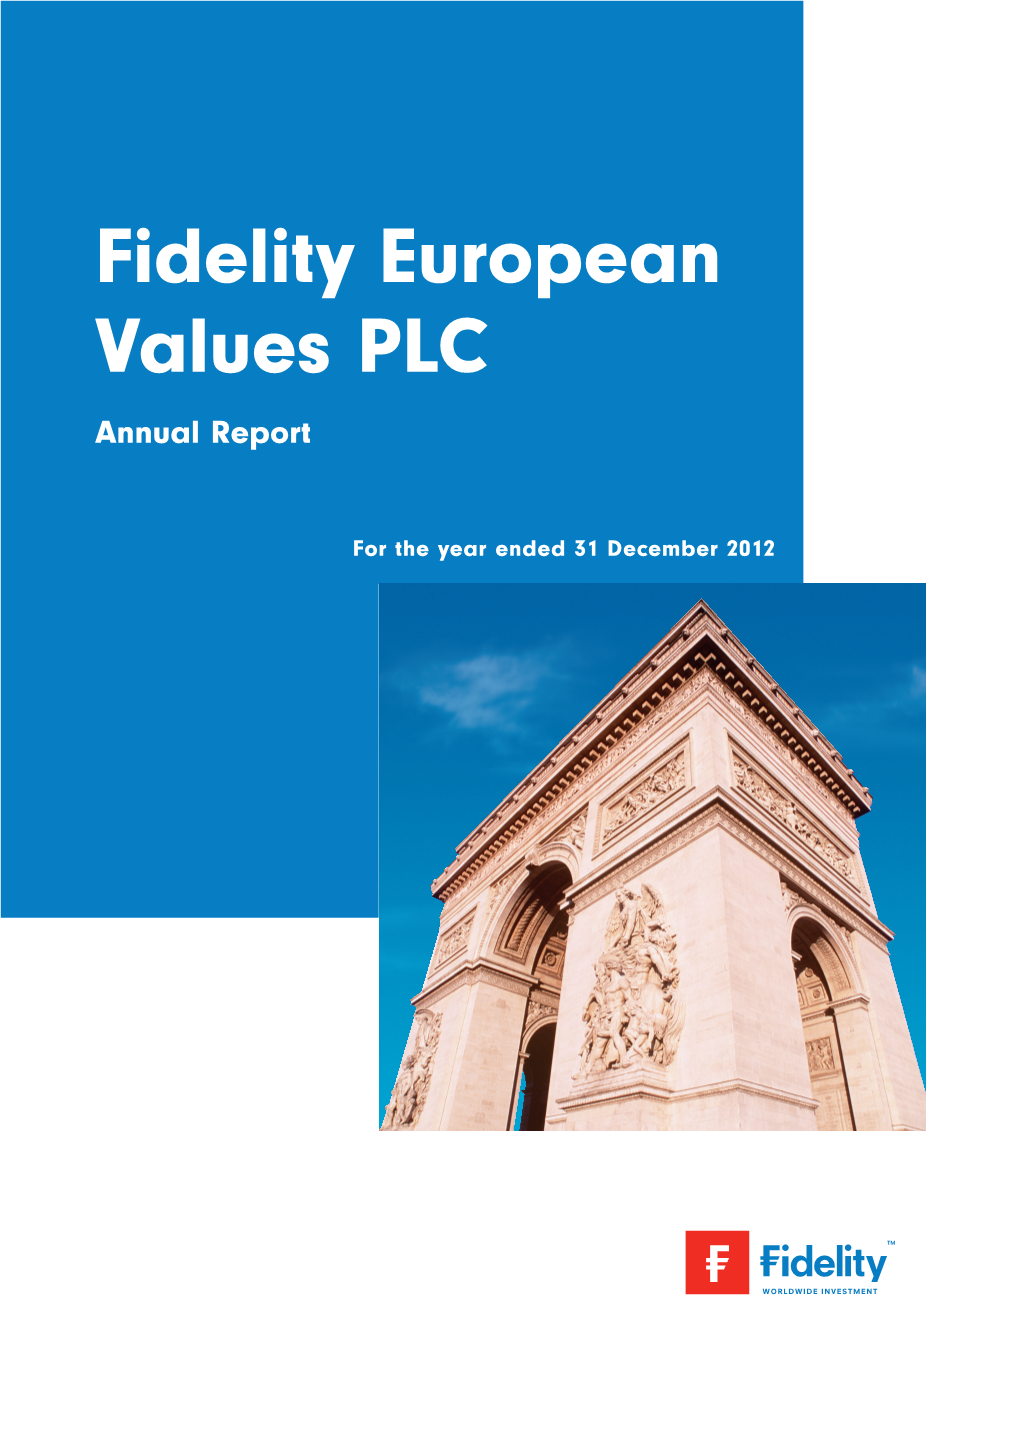 Fidelity European Values PLC Annual Report